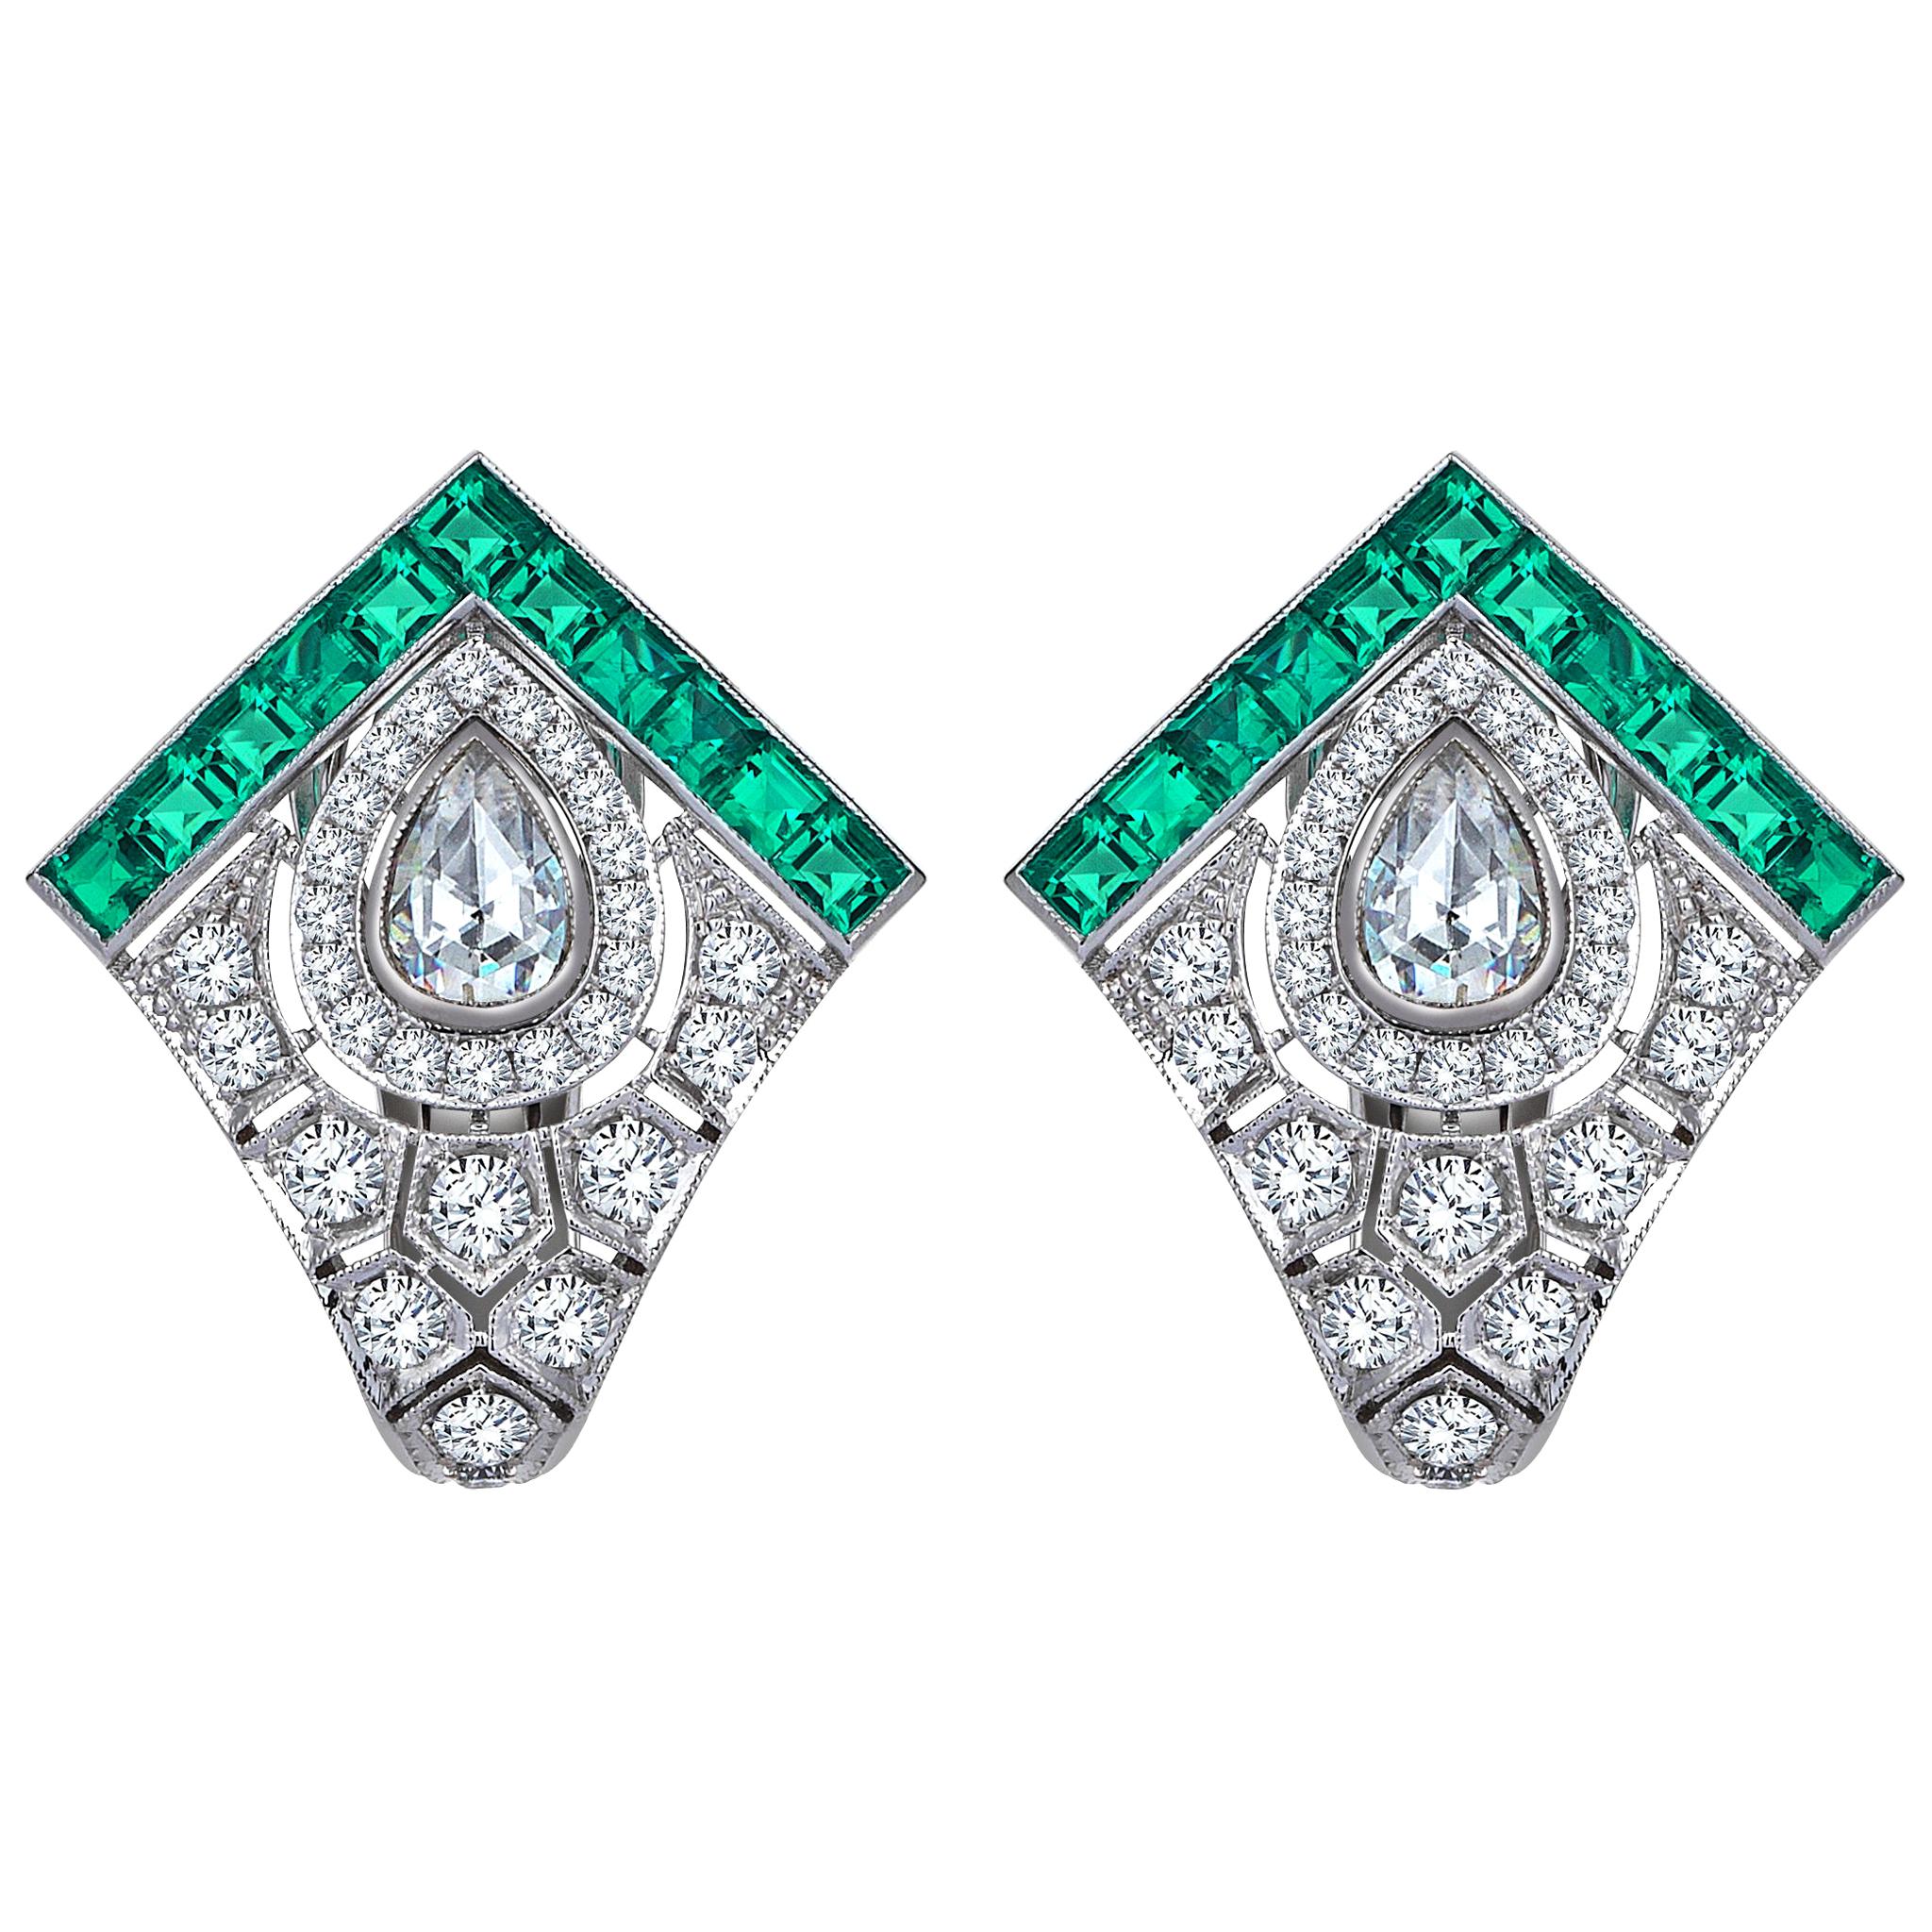 Monan 1.68 Carat Diamond and 1.22 Carat Emerald Art Deco Style Earrings For Sale